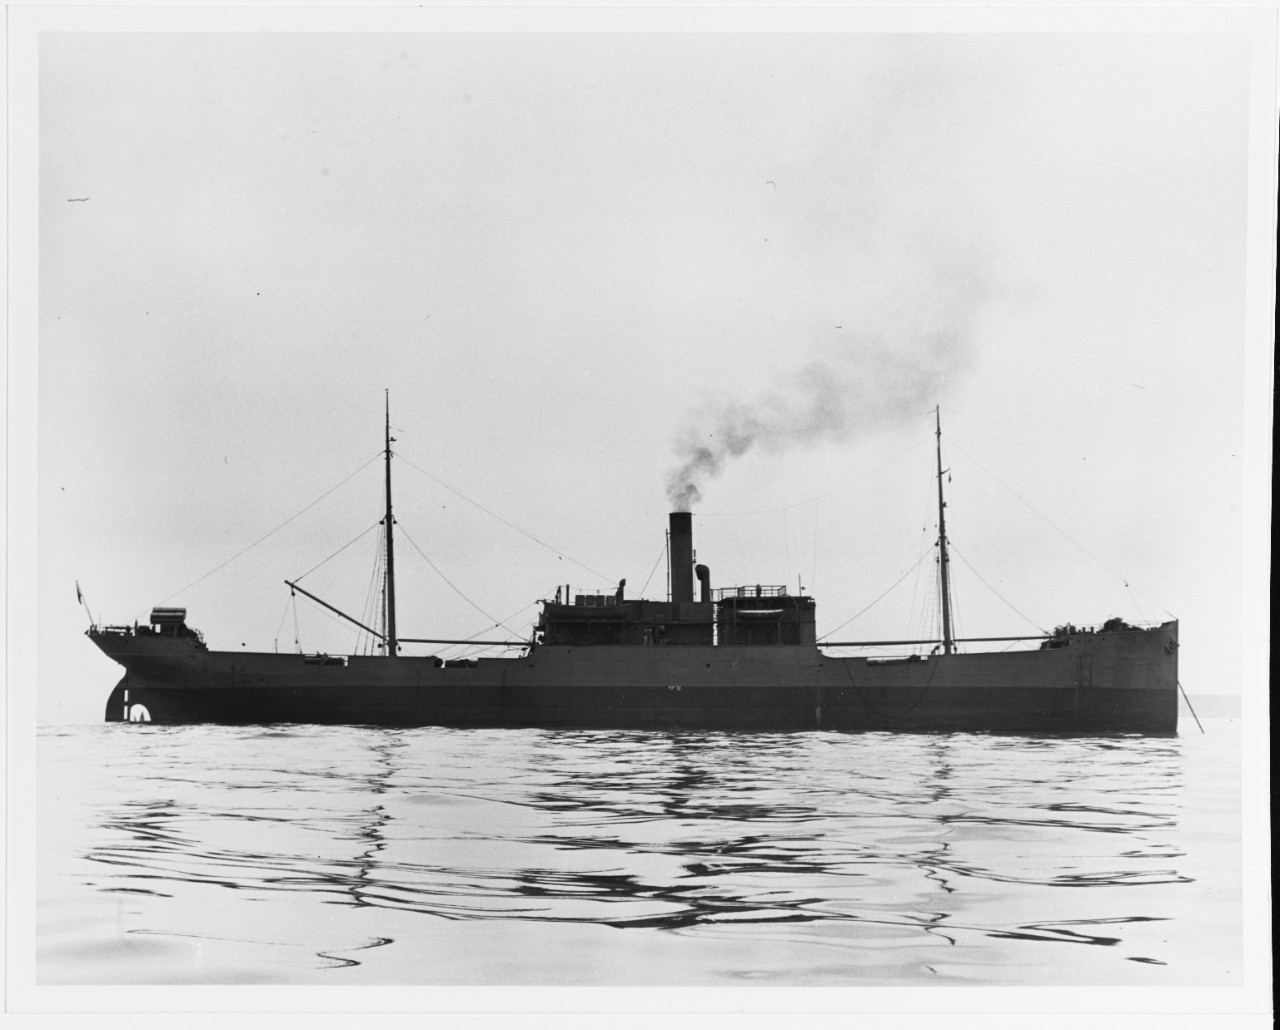 S.S. KARMEN (Yugoslav Merchant Cargo Ship, 1896-1952)